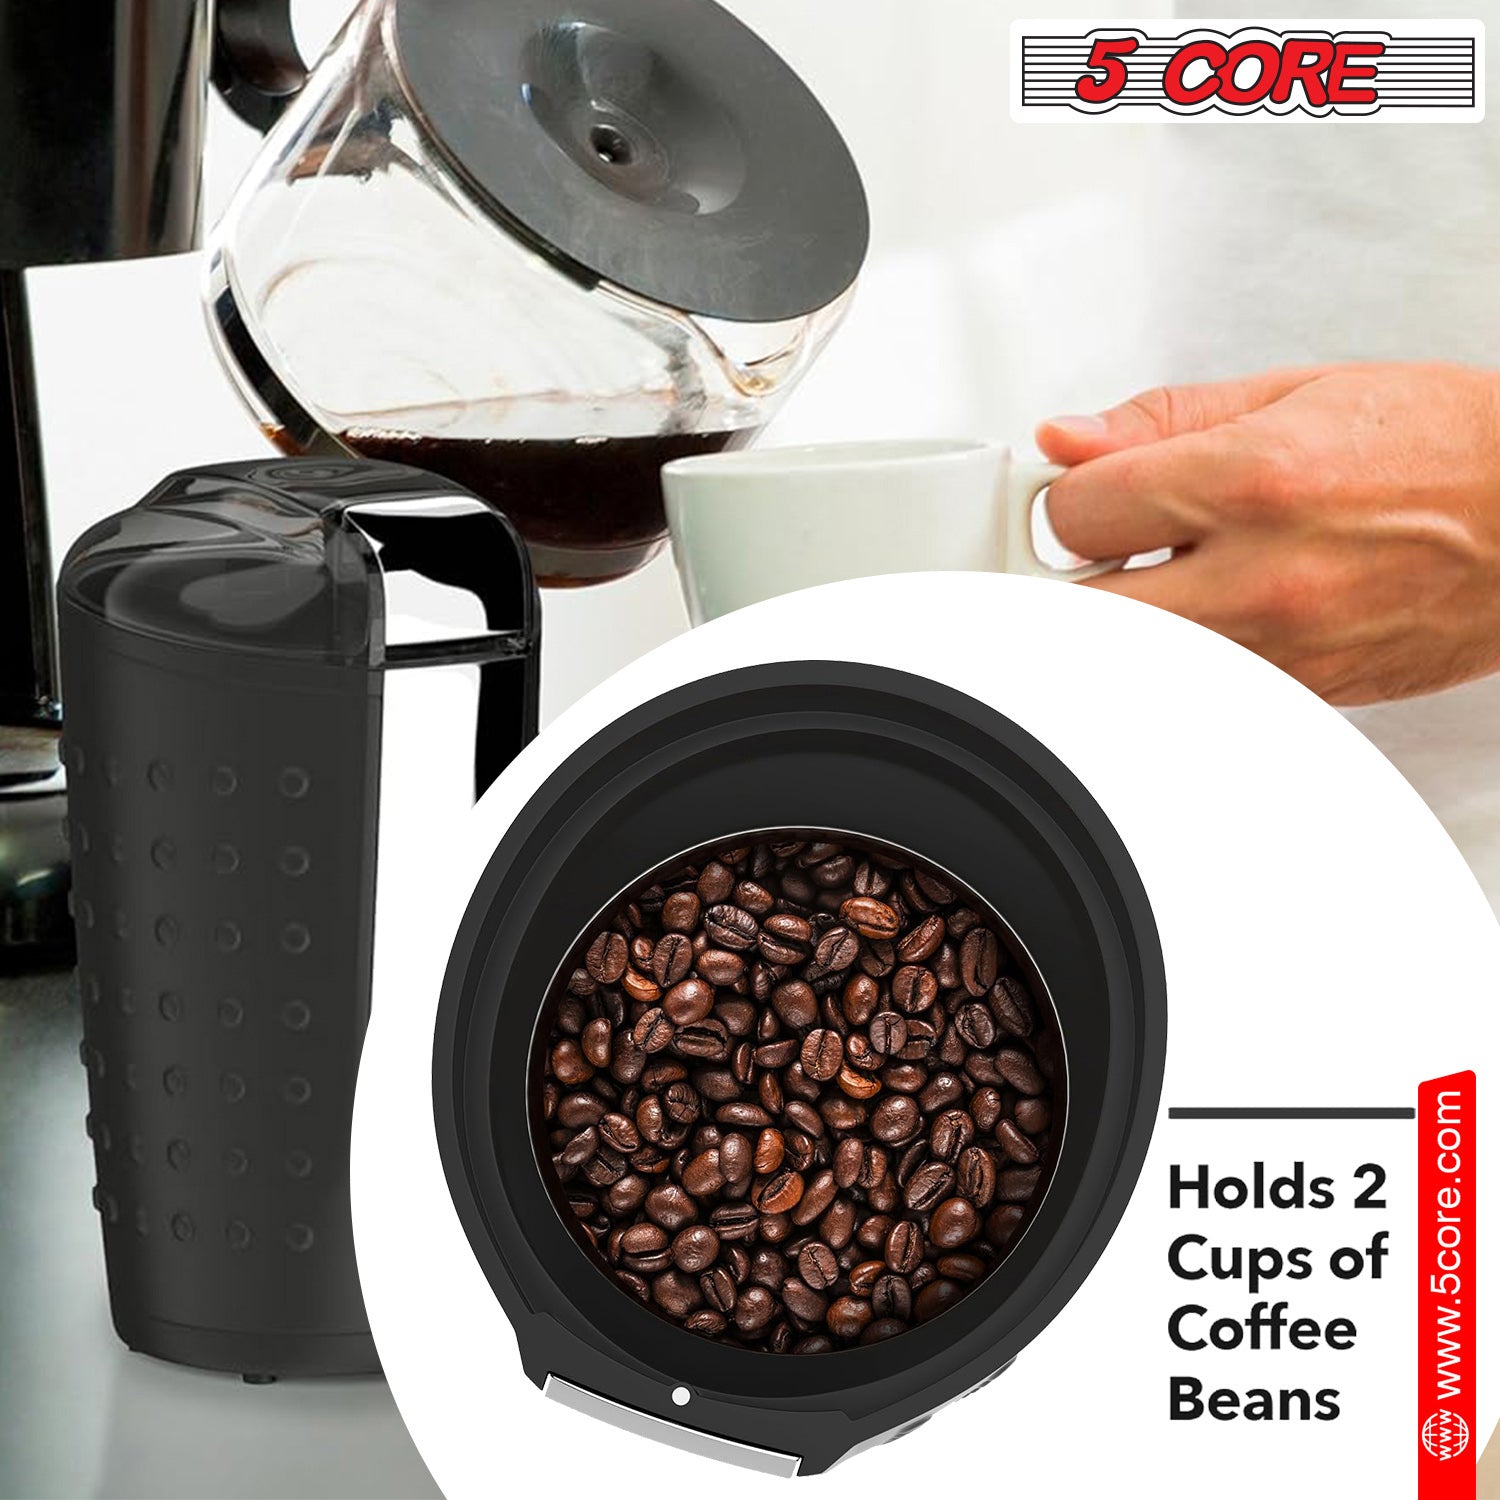 5 Core Coffee Grinder 85 Gram Capacity 150W Electric Bean Spice Grinders Black